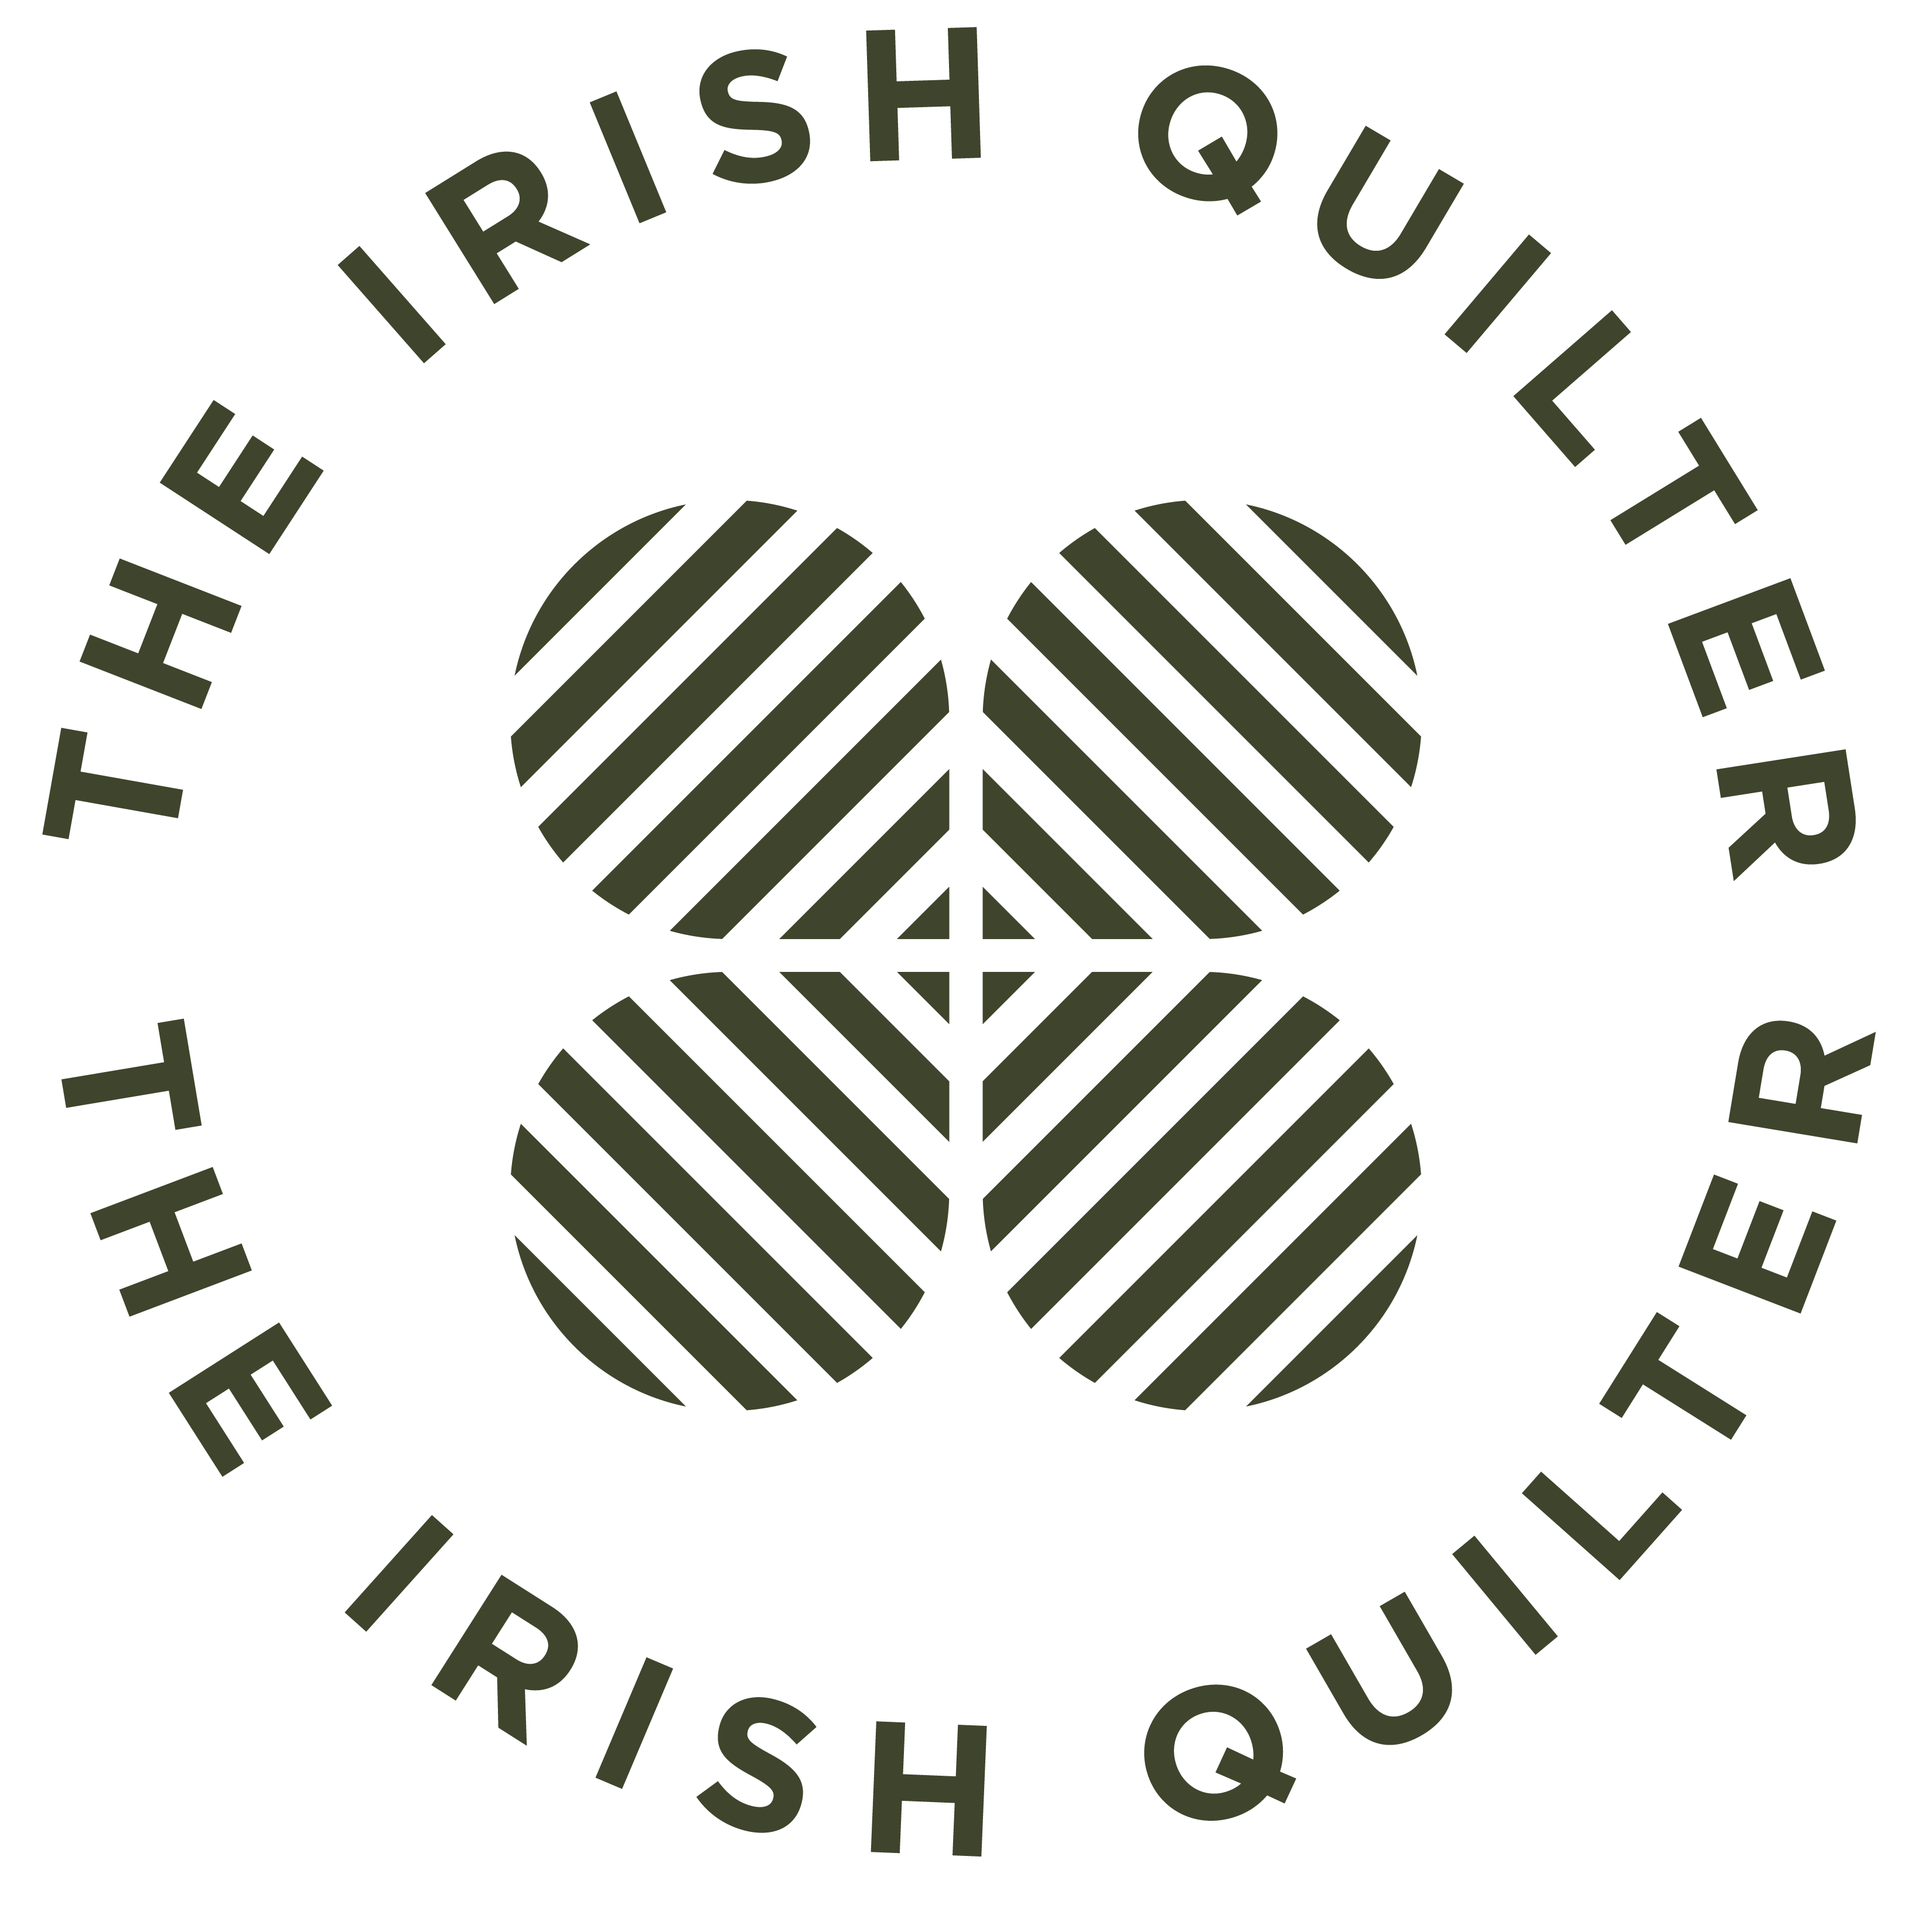 The Irish Quilter